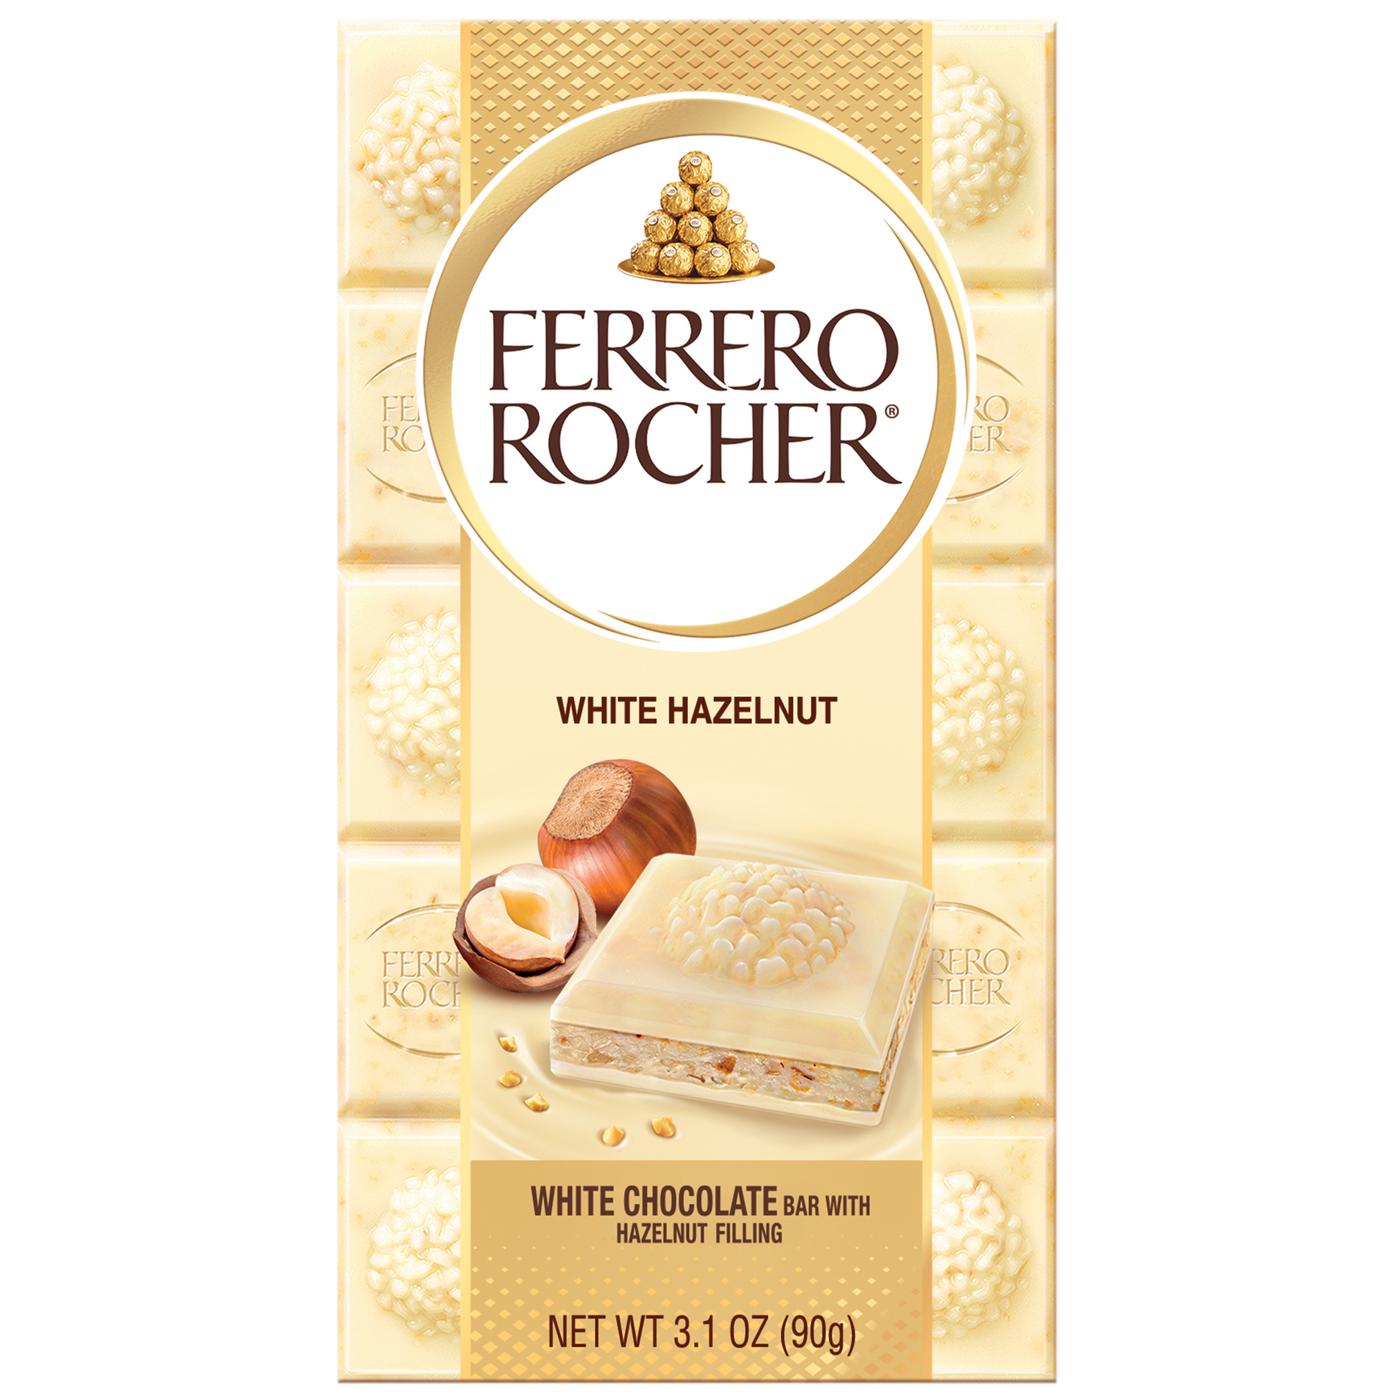 Ferrero Rocher White Hazelnut Chocolate Bar; image 1 of 6